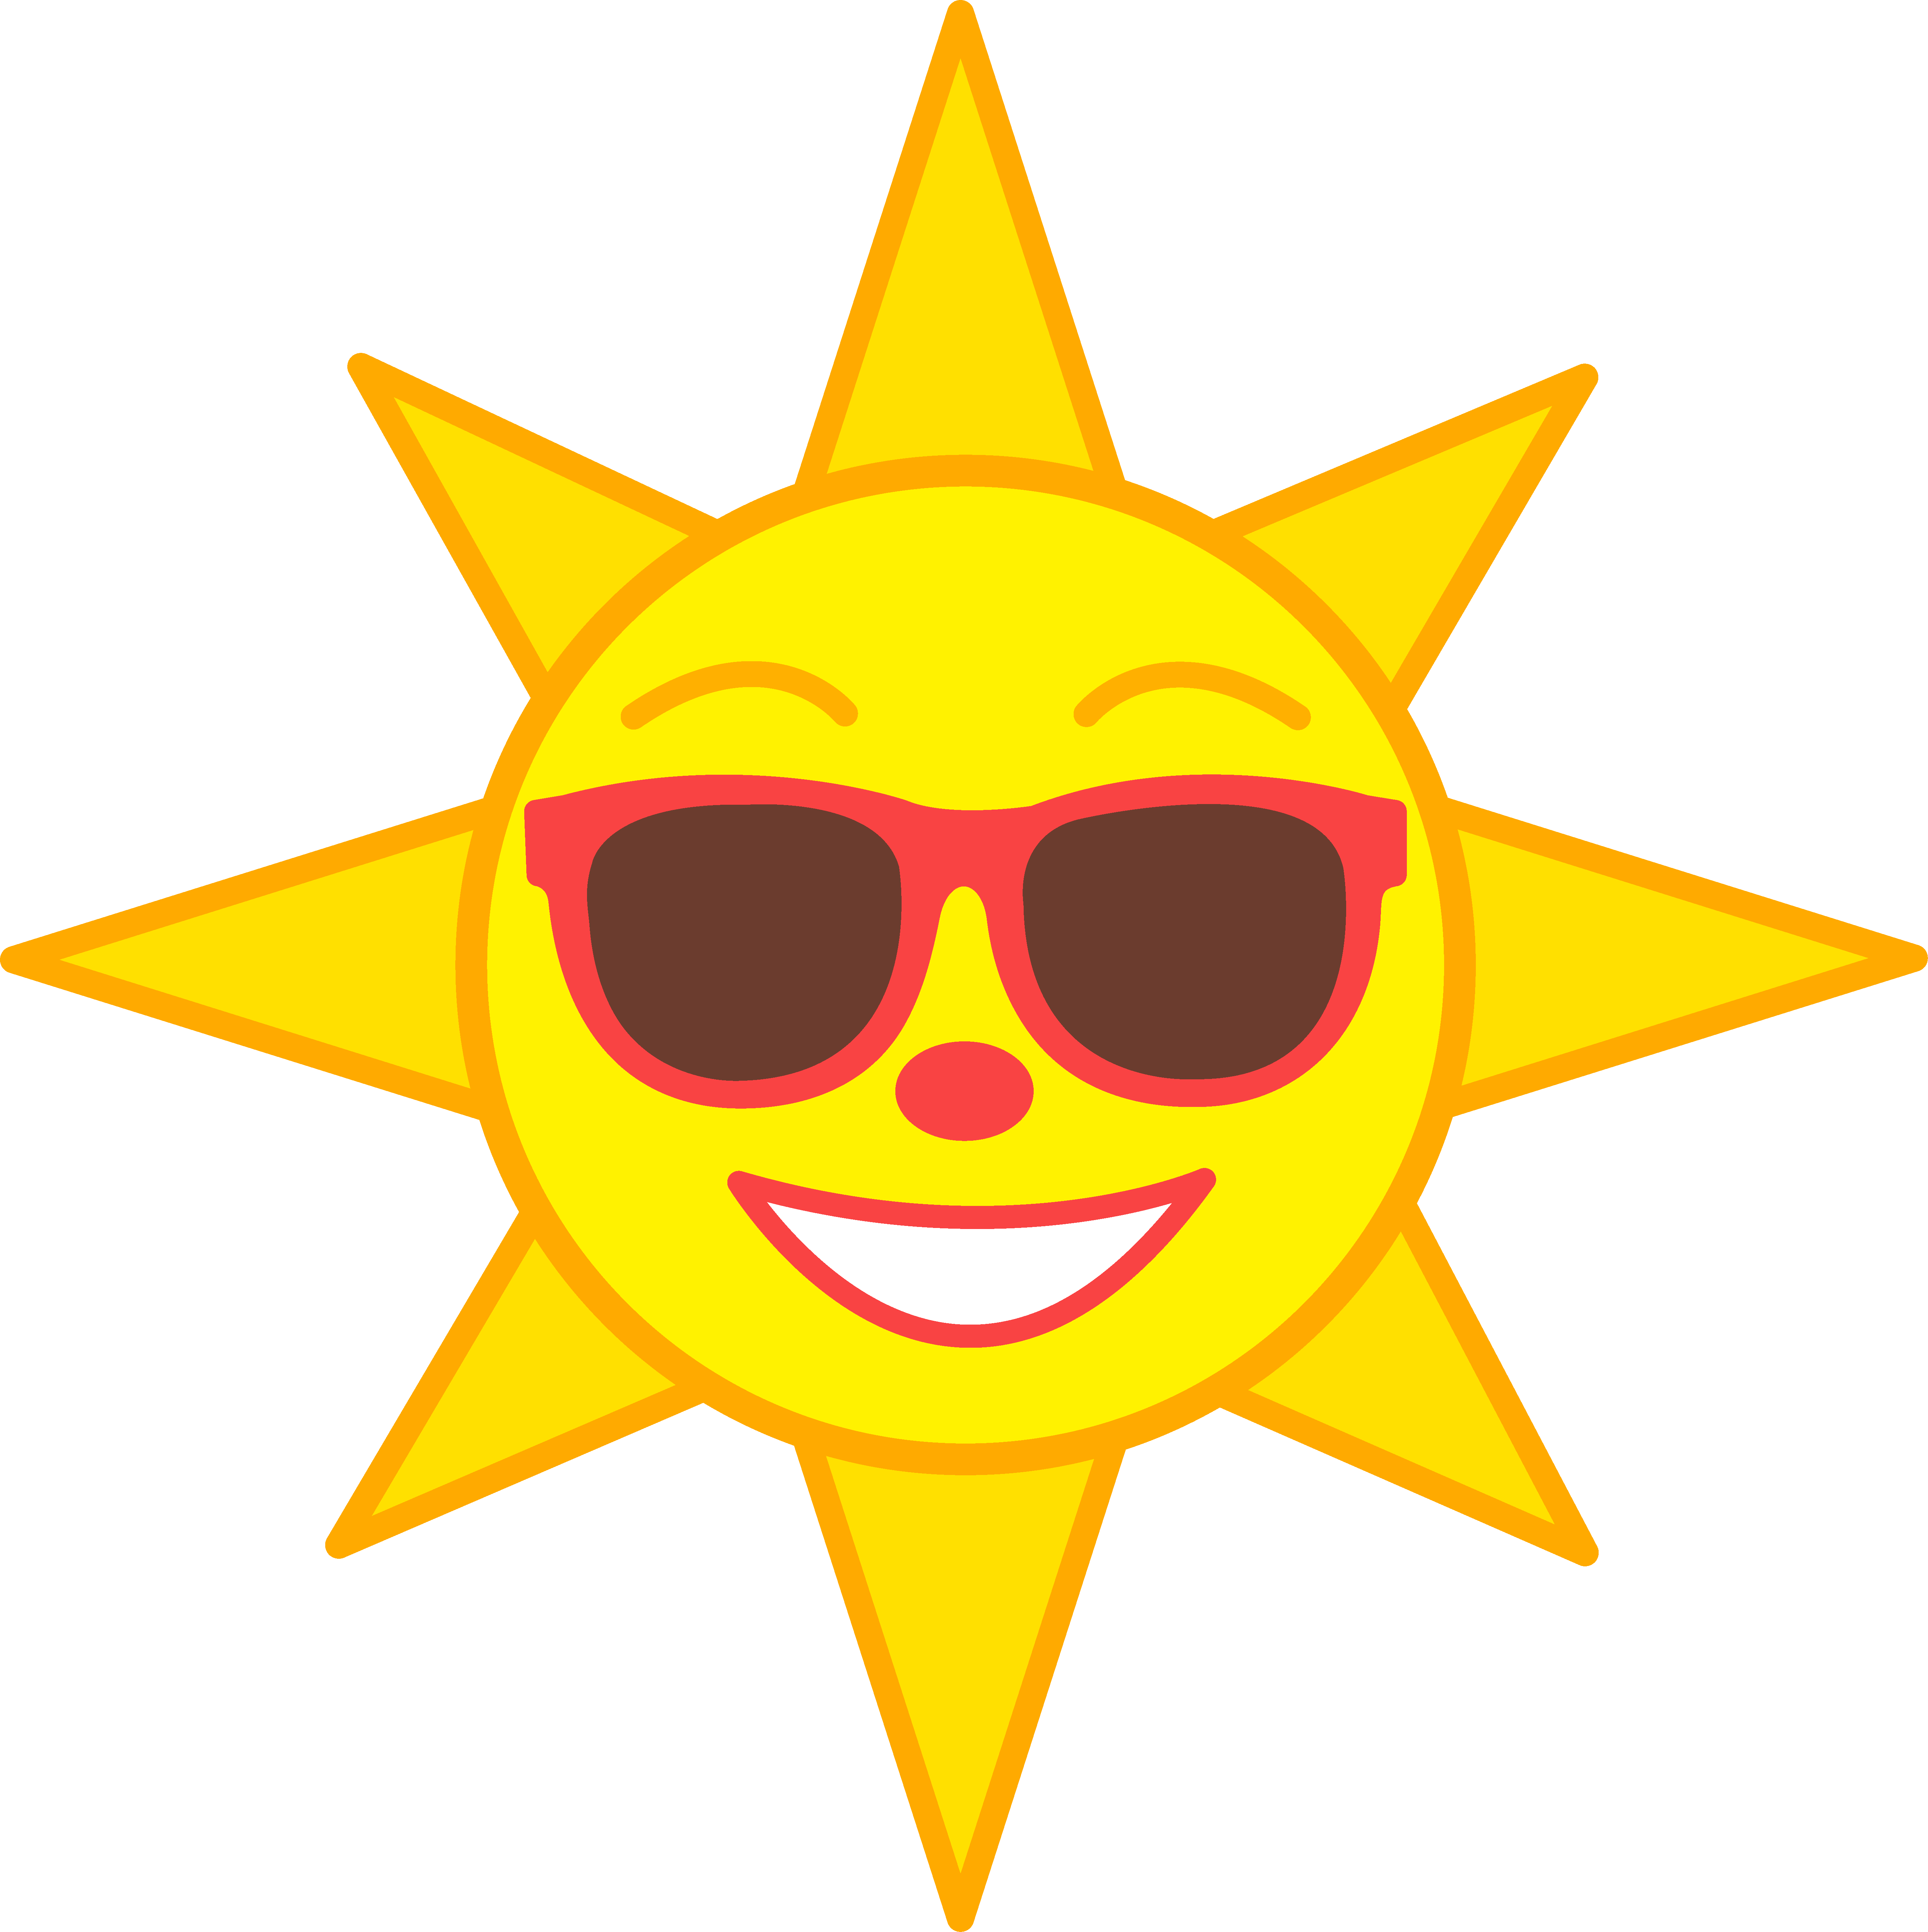 Smiling sun clipart royalty free - ClipartFox